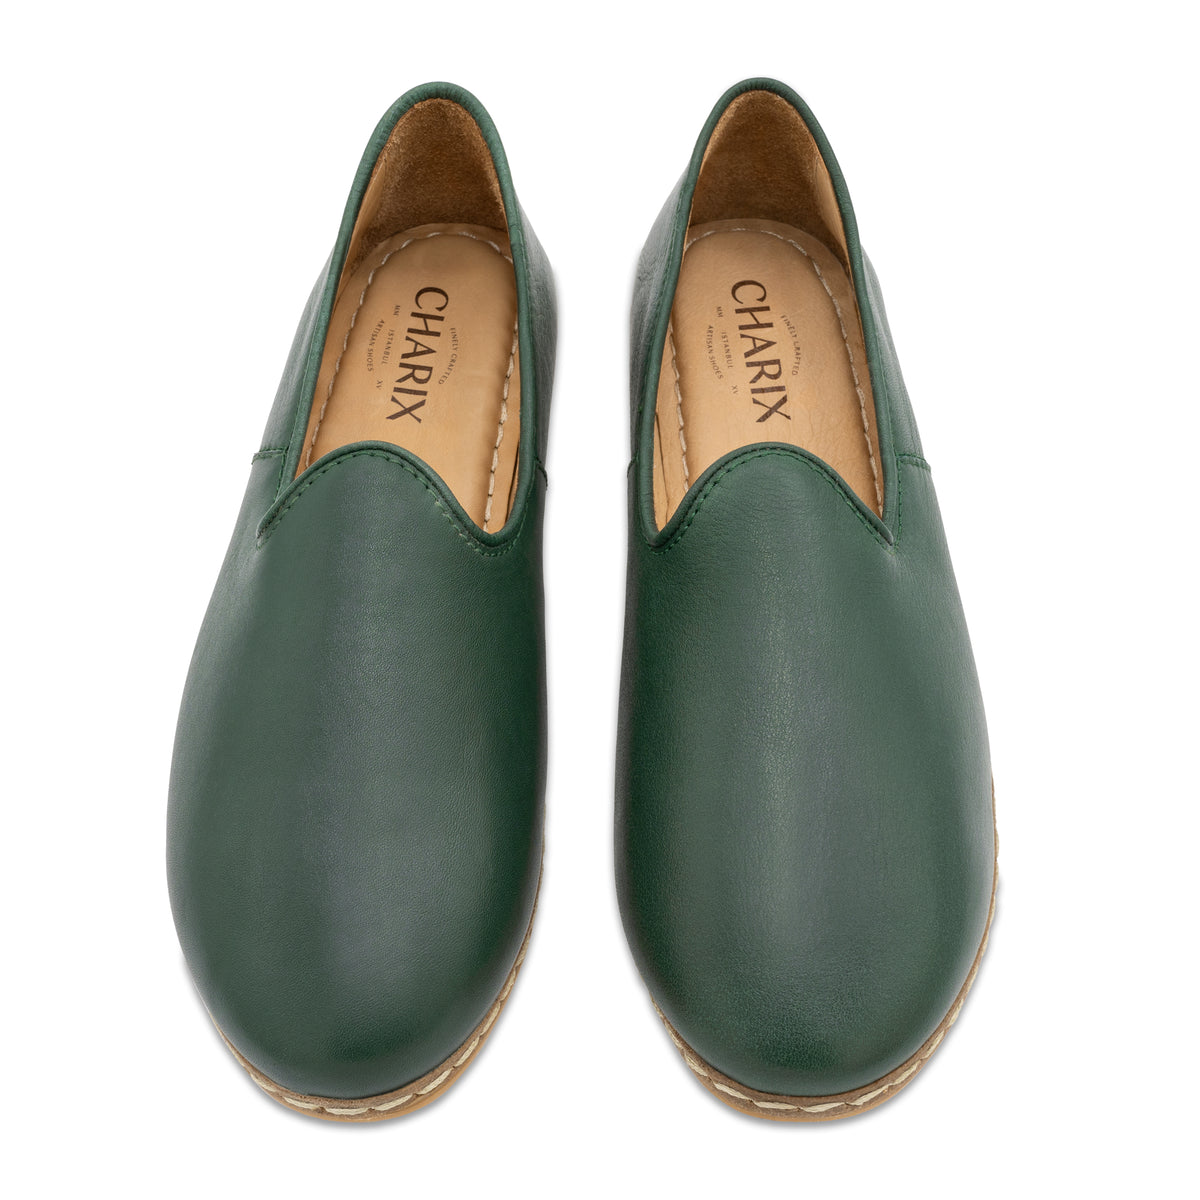 Hunter Green Slip Ons for Men - Charix Shoes